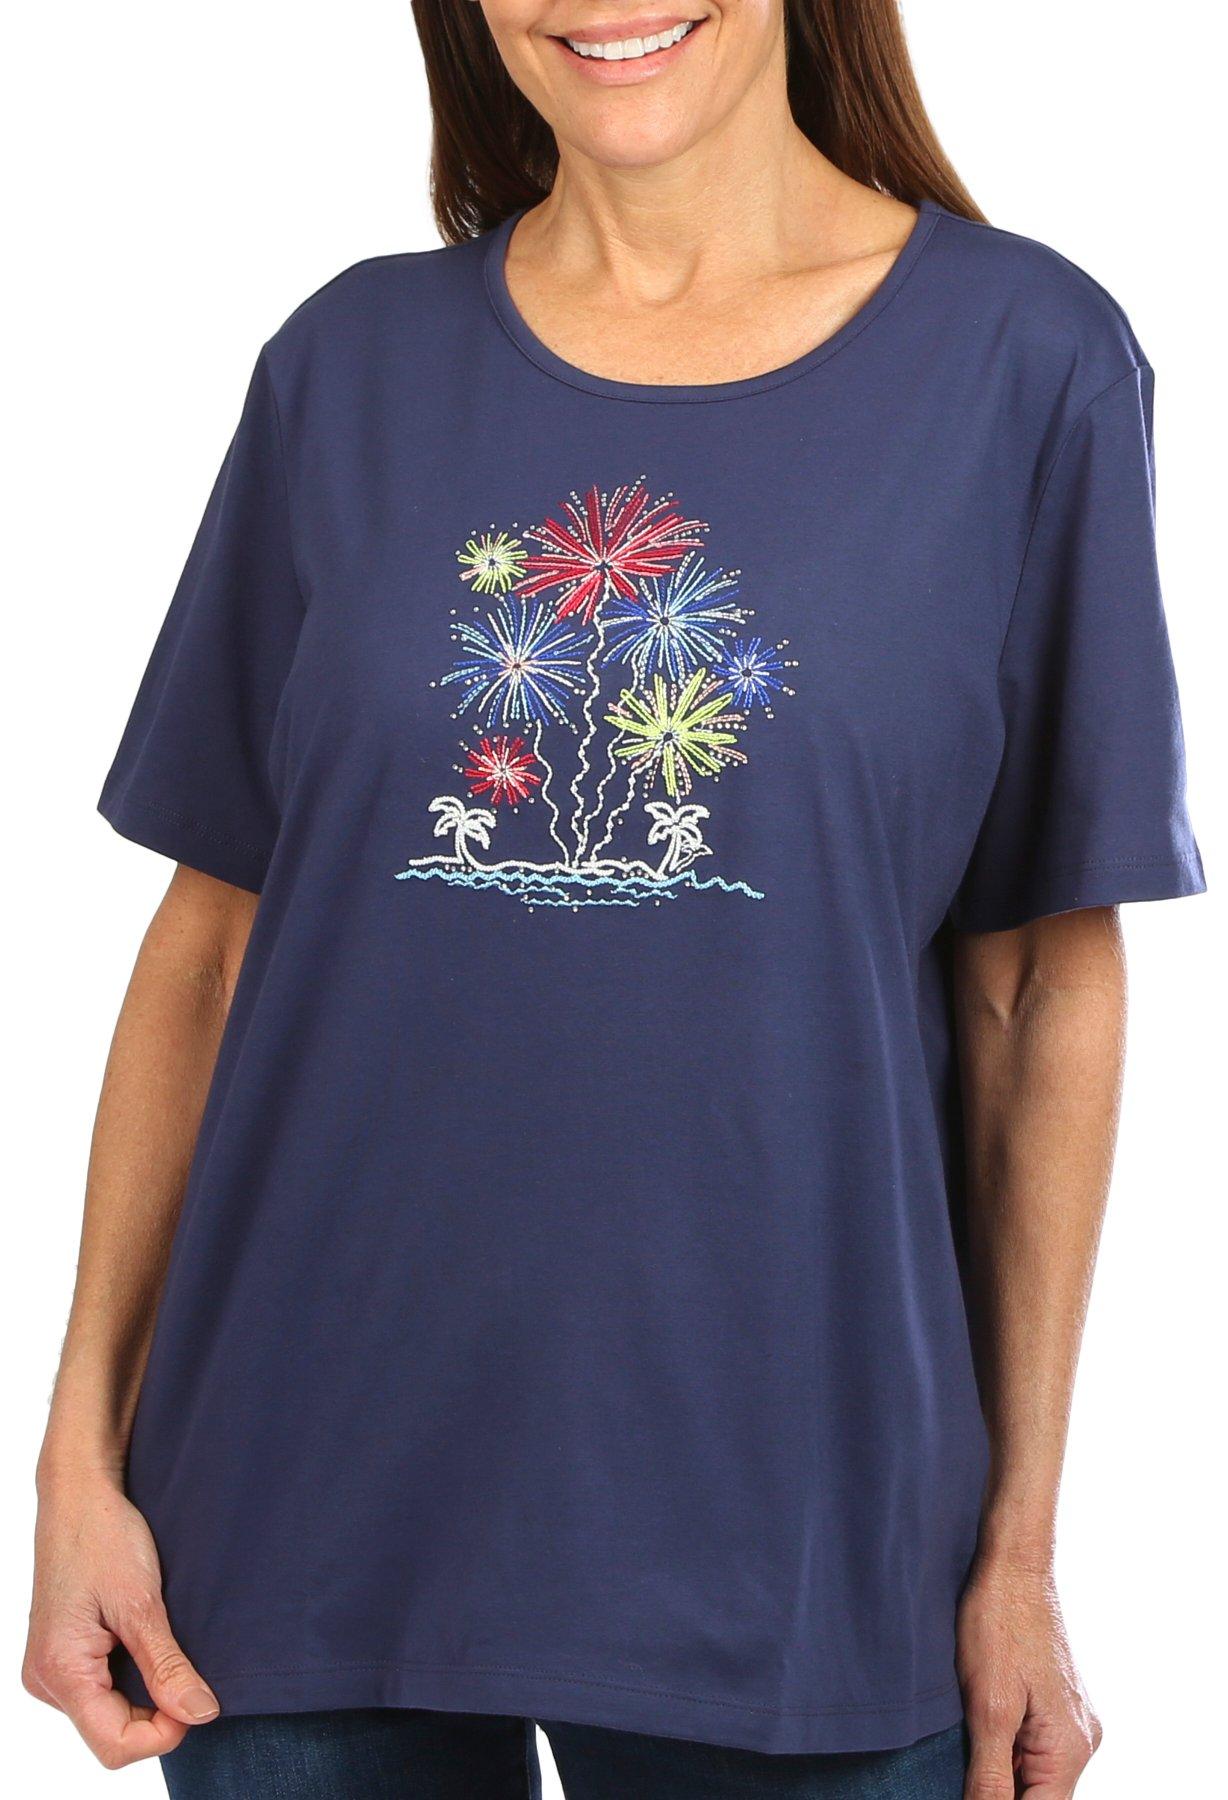 Coral Bay Petite Americana Fireworks Jewel Short Sleeve Top